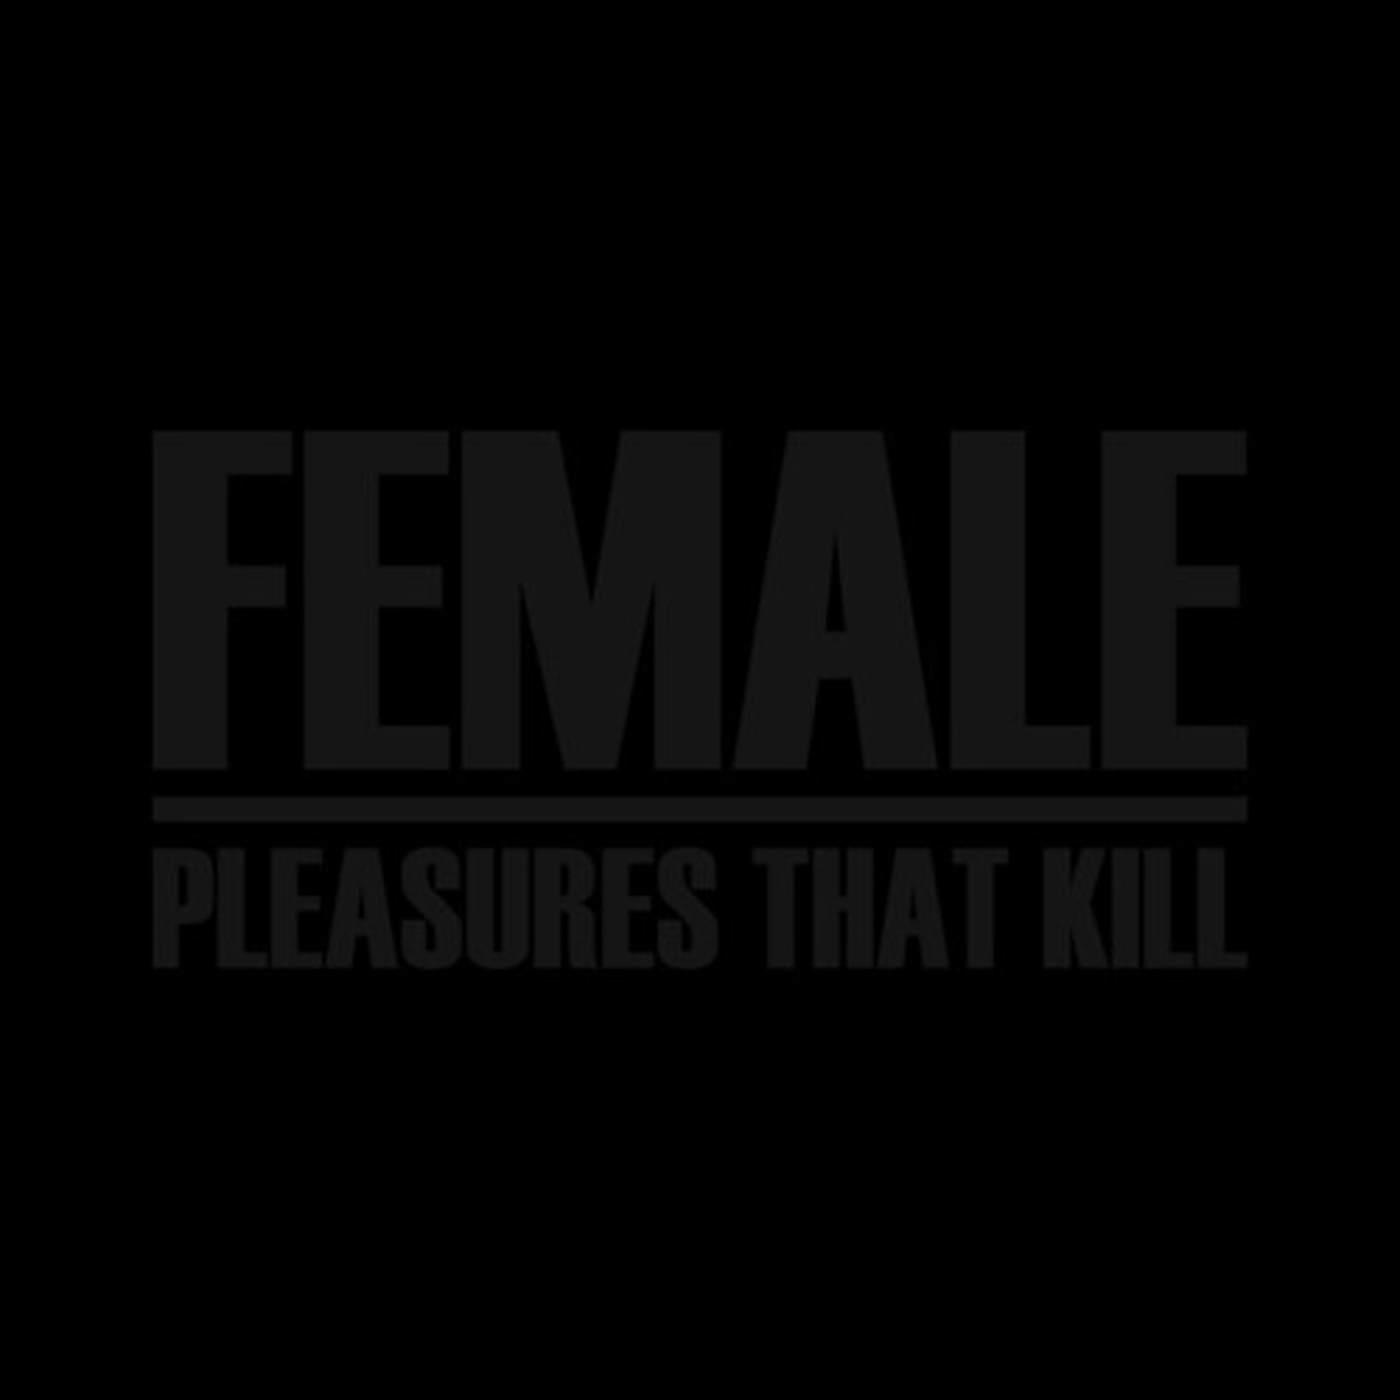 Female PLEASURES THAT KILL CD